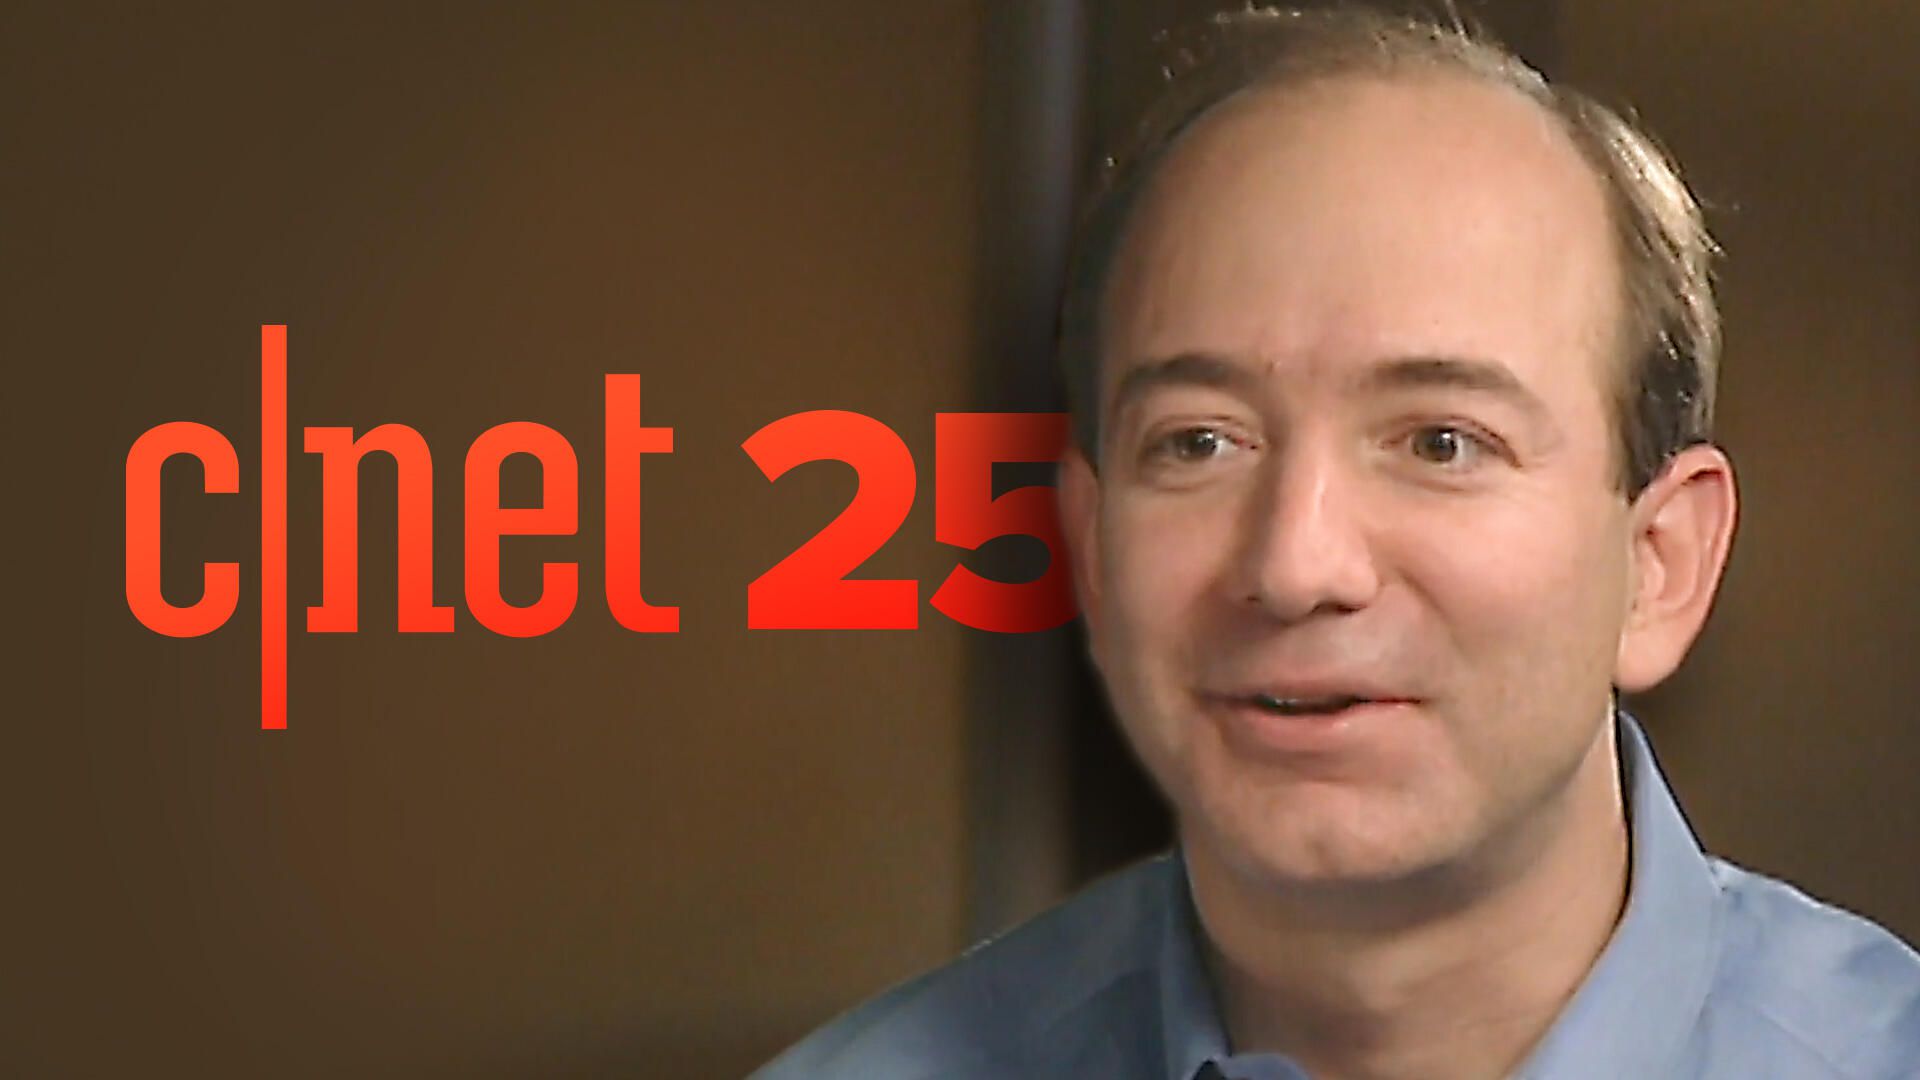 Jeff Bezos Interview Questions